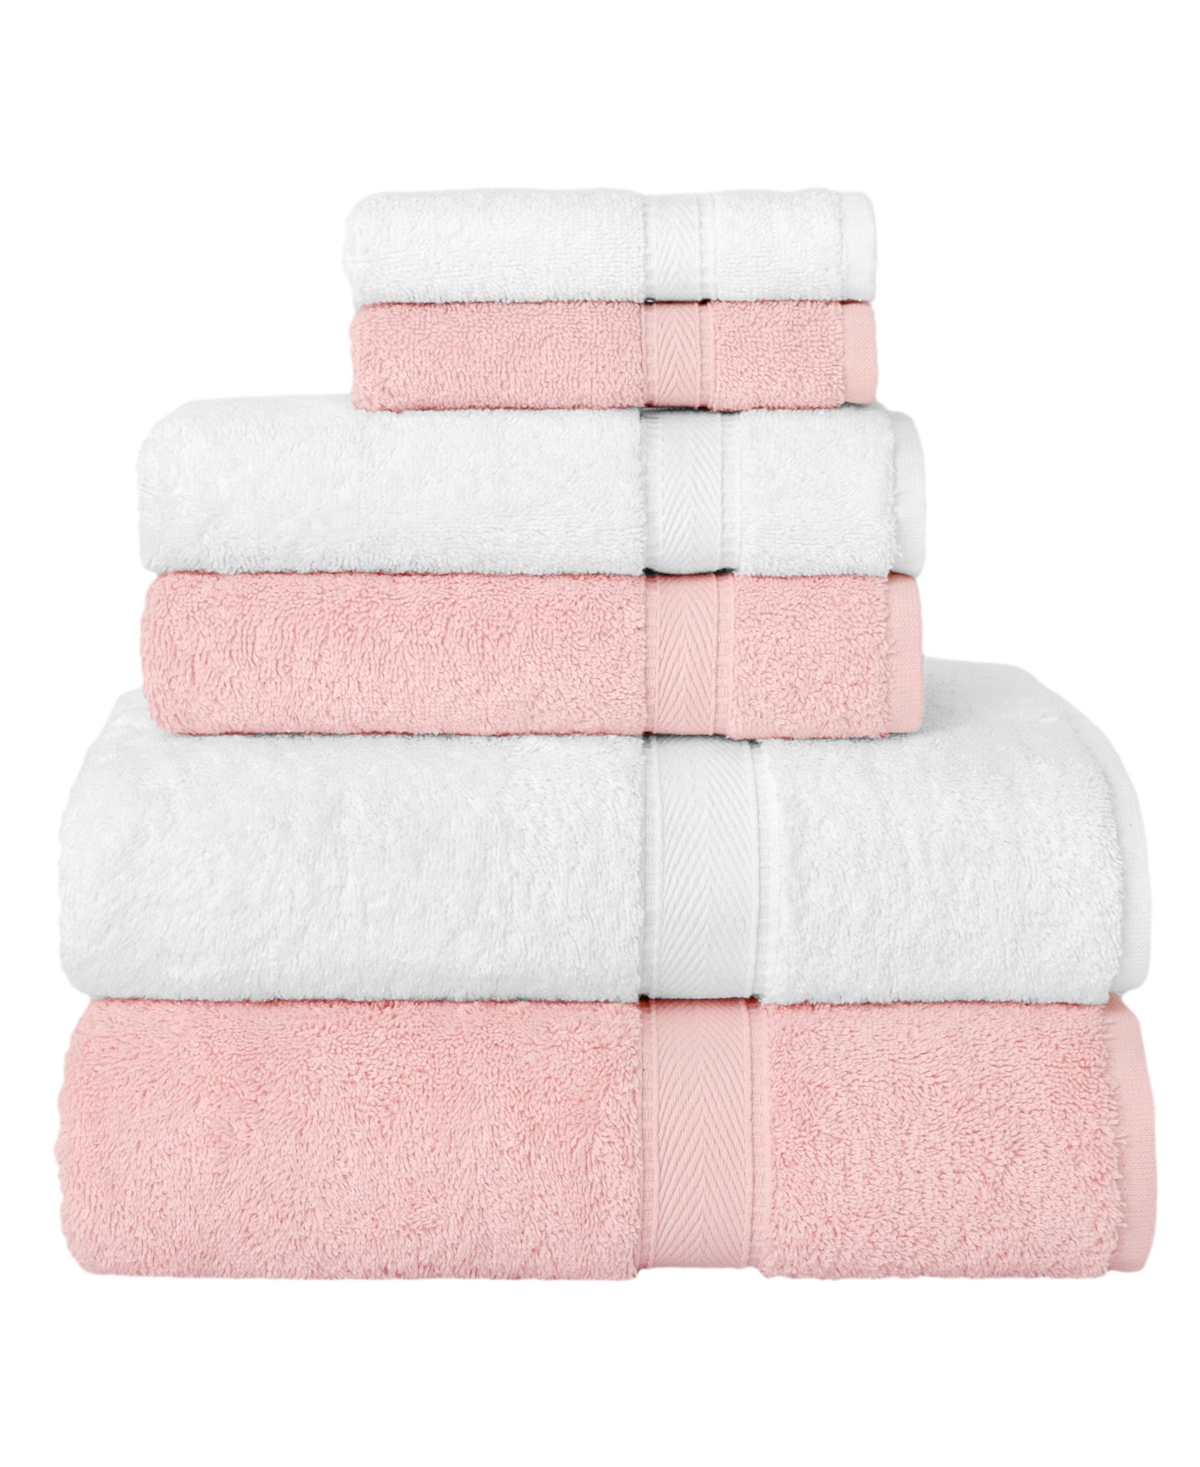 Linum Home Sinemis Terry 6-pc. Towel Set In Pink